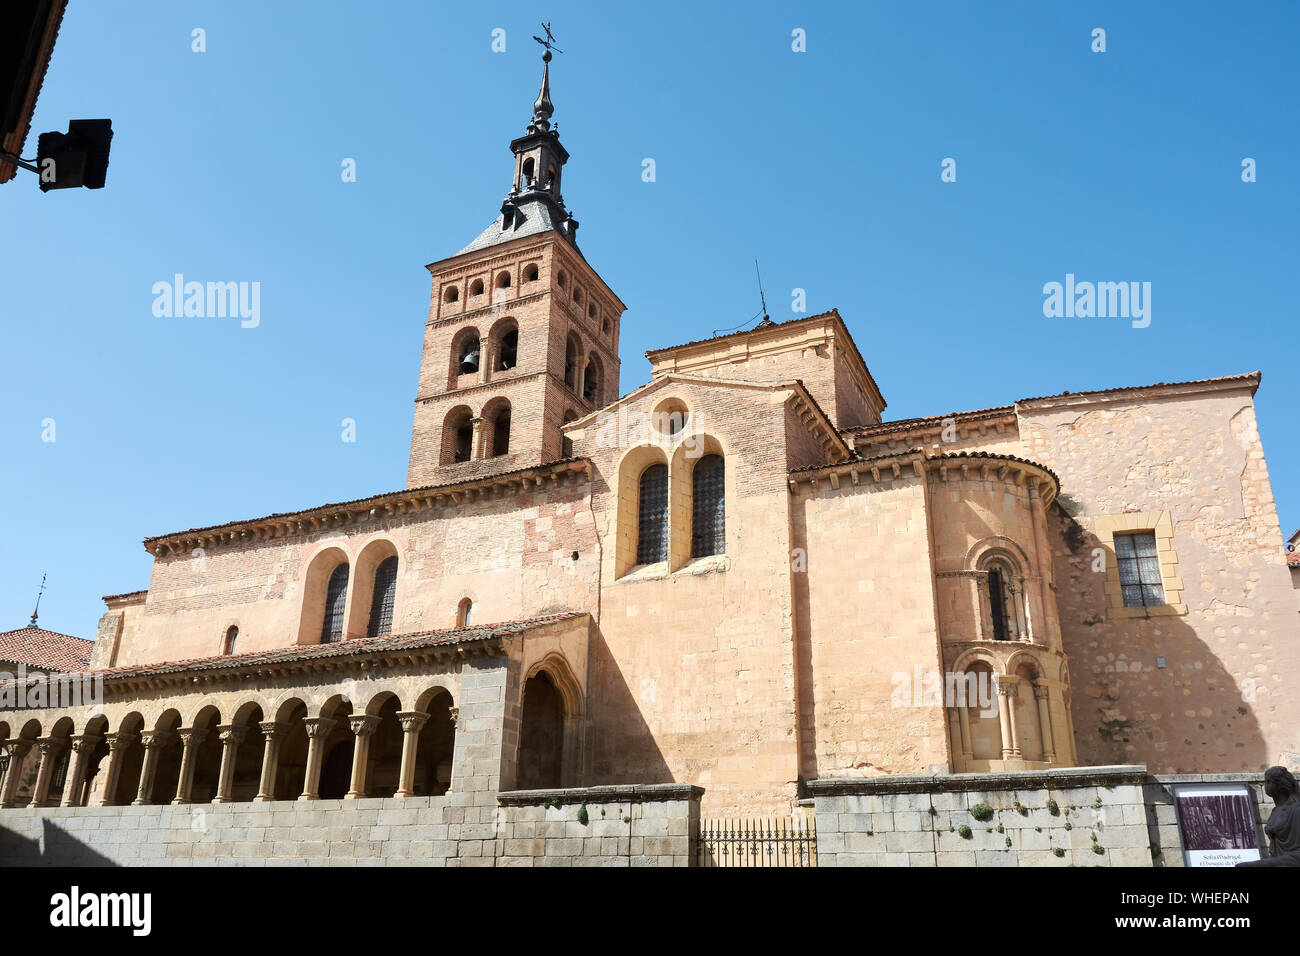 SEGOVIA, SPAIN - APRIL 25, 2018: The facade of the San Martin church in Segovia. Stock Photo